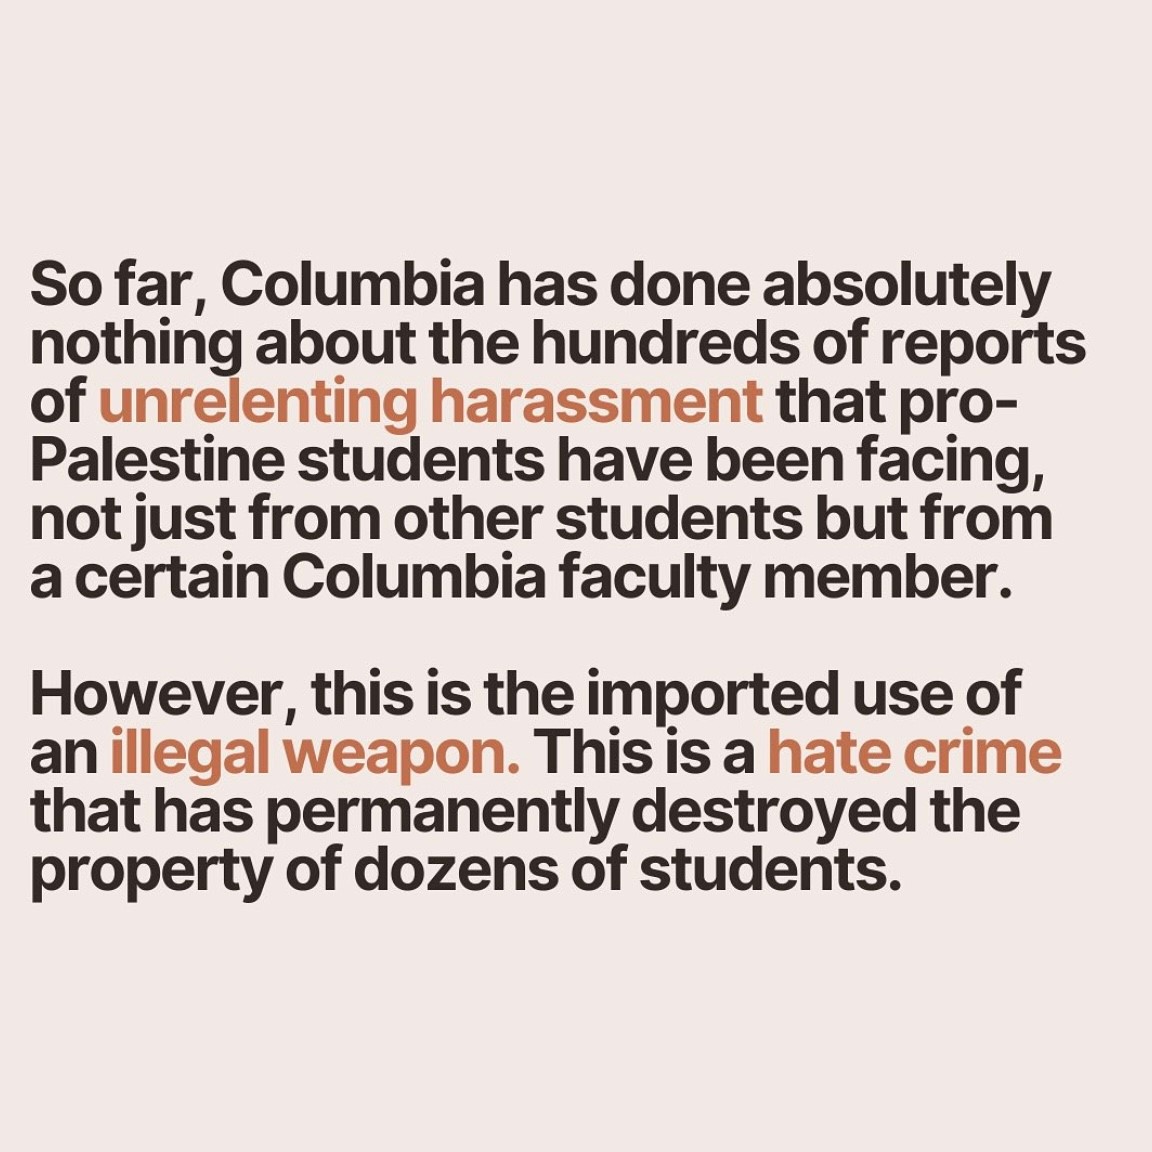 Repost from @ColumbiaSJP

#ColumbiaUniversity #Protest #Gaza #Israel #Palestine #IOF #DemilitariseEducation #Peace #Students #Uni #University